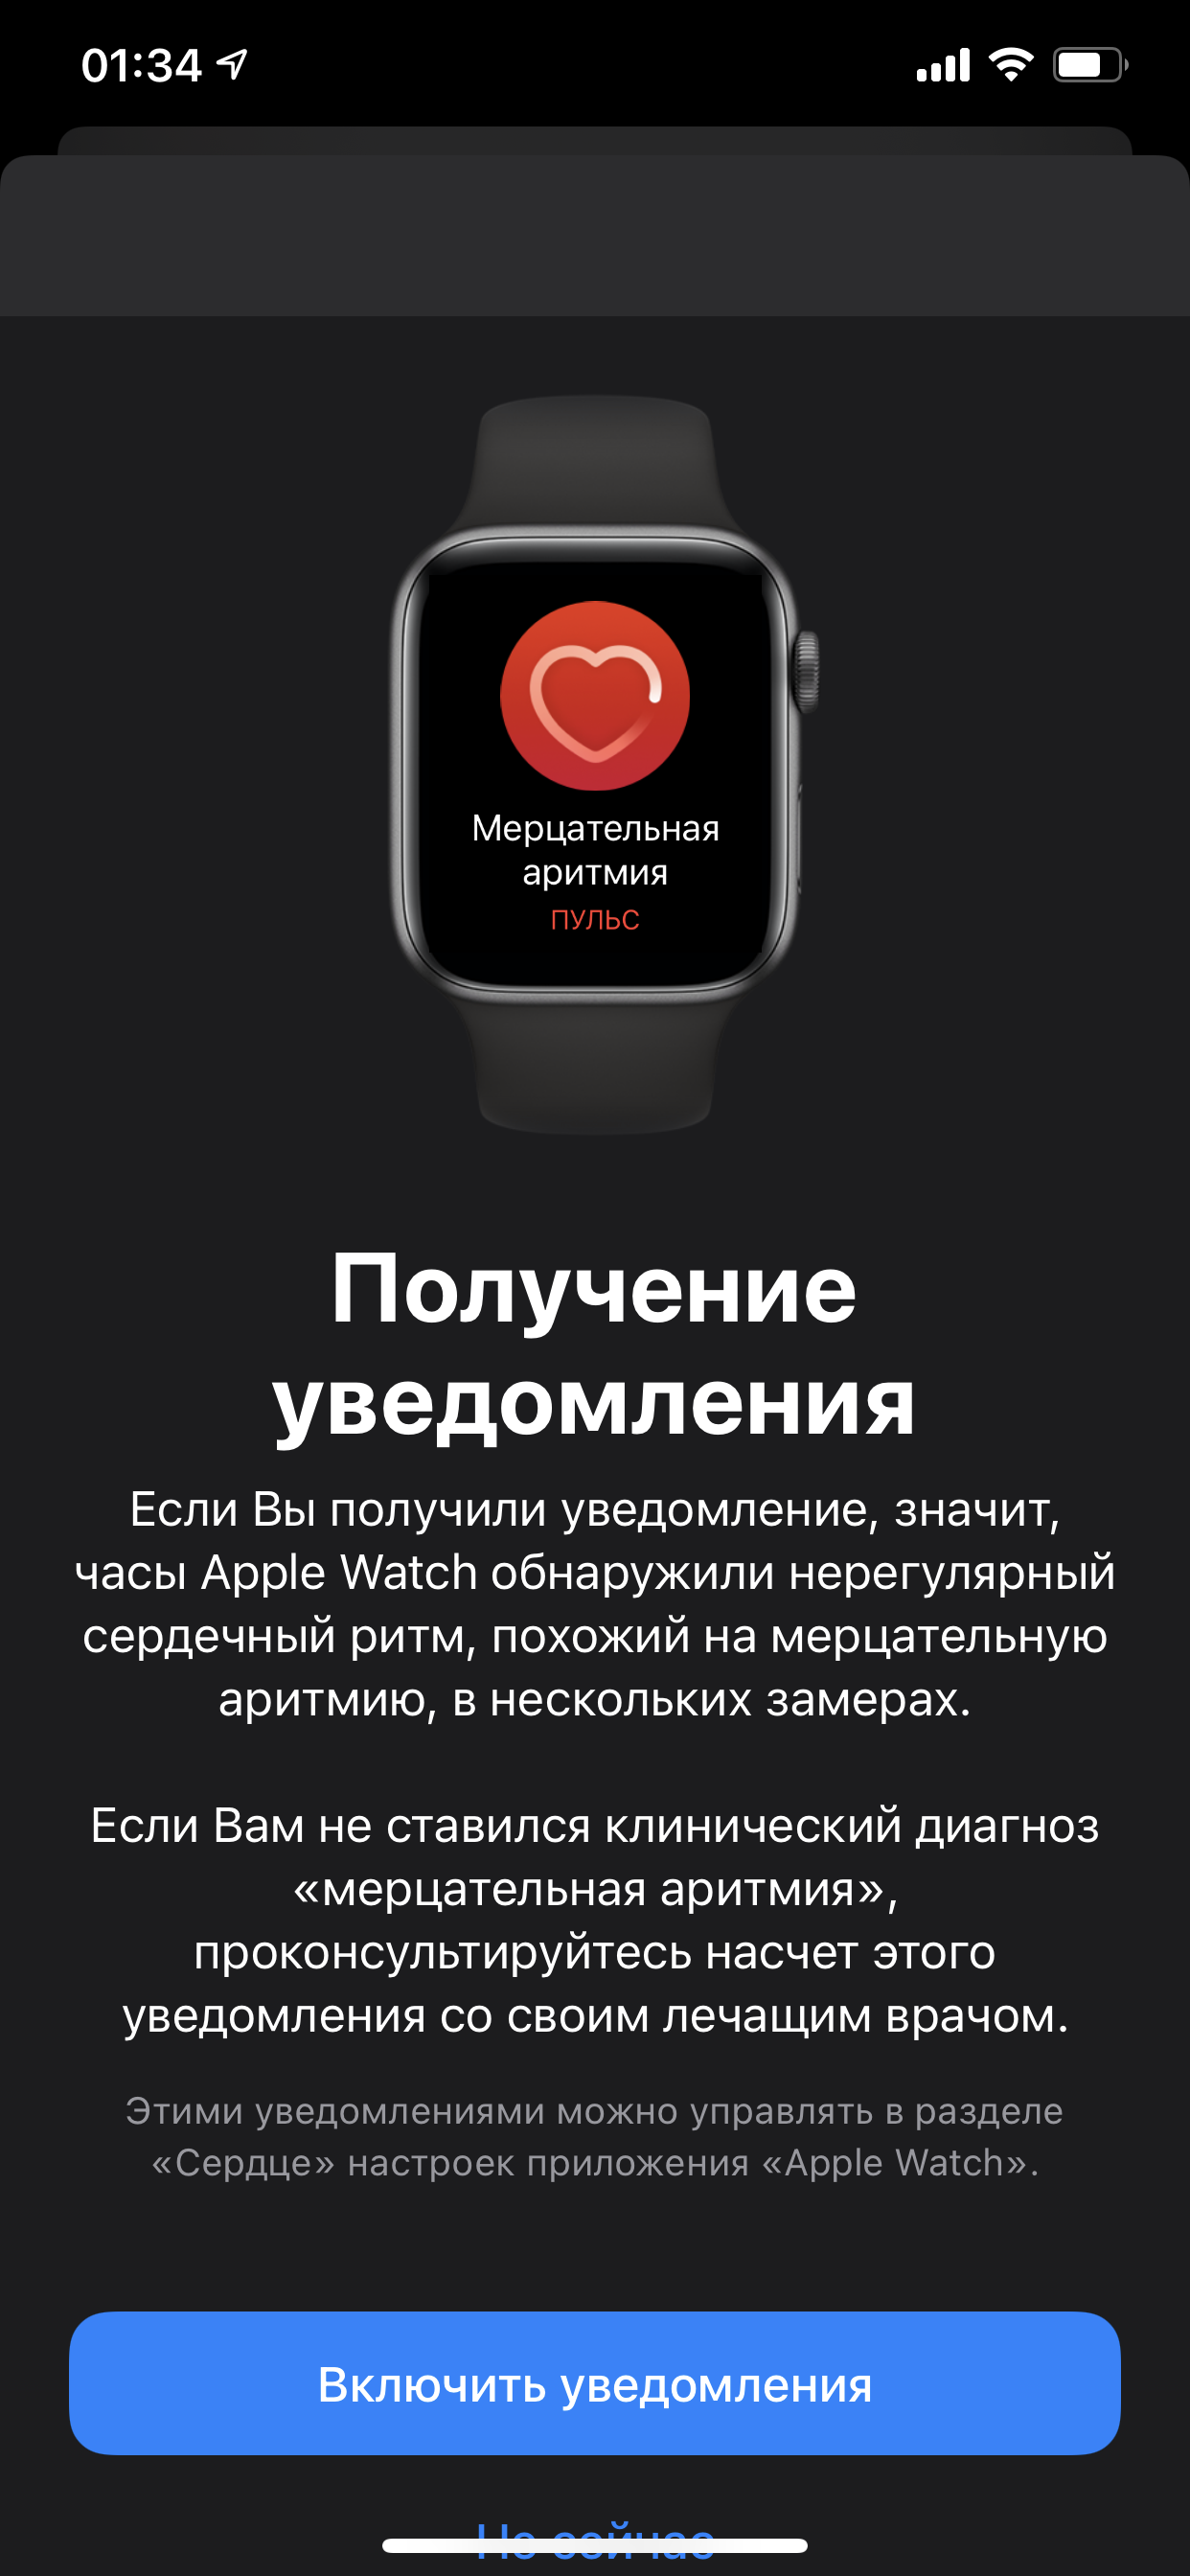 Уведомления на часах apple. Уведомления на Эппл вотч. Уведомления на АПЛ вотч. Apple watch сообщения. Уведомления на смарт часах.